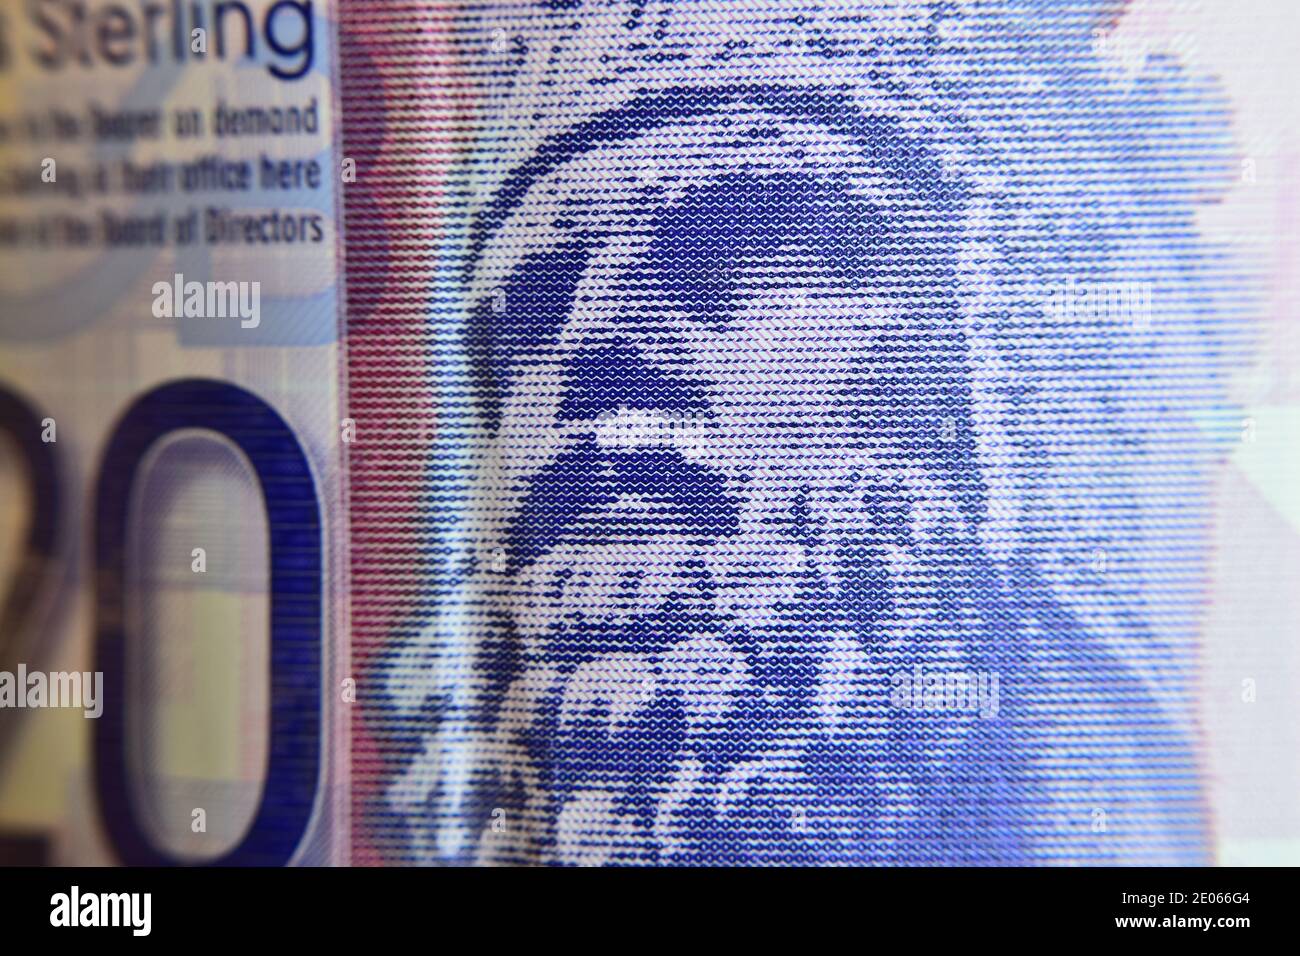 20 pounds scottish note Stock Photo